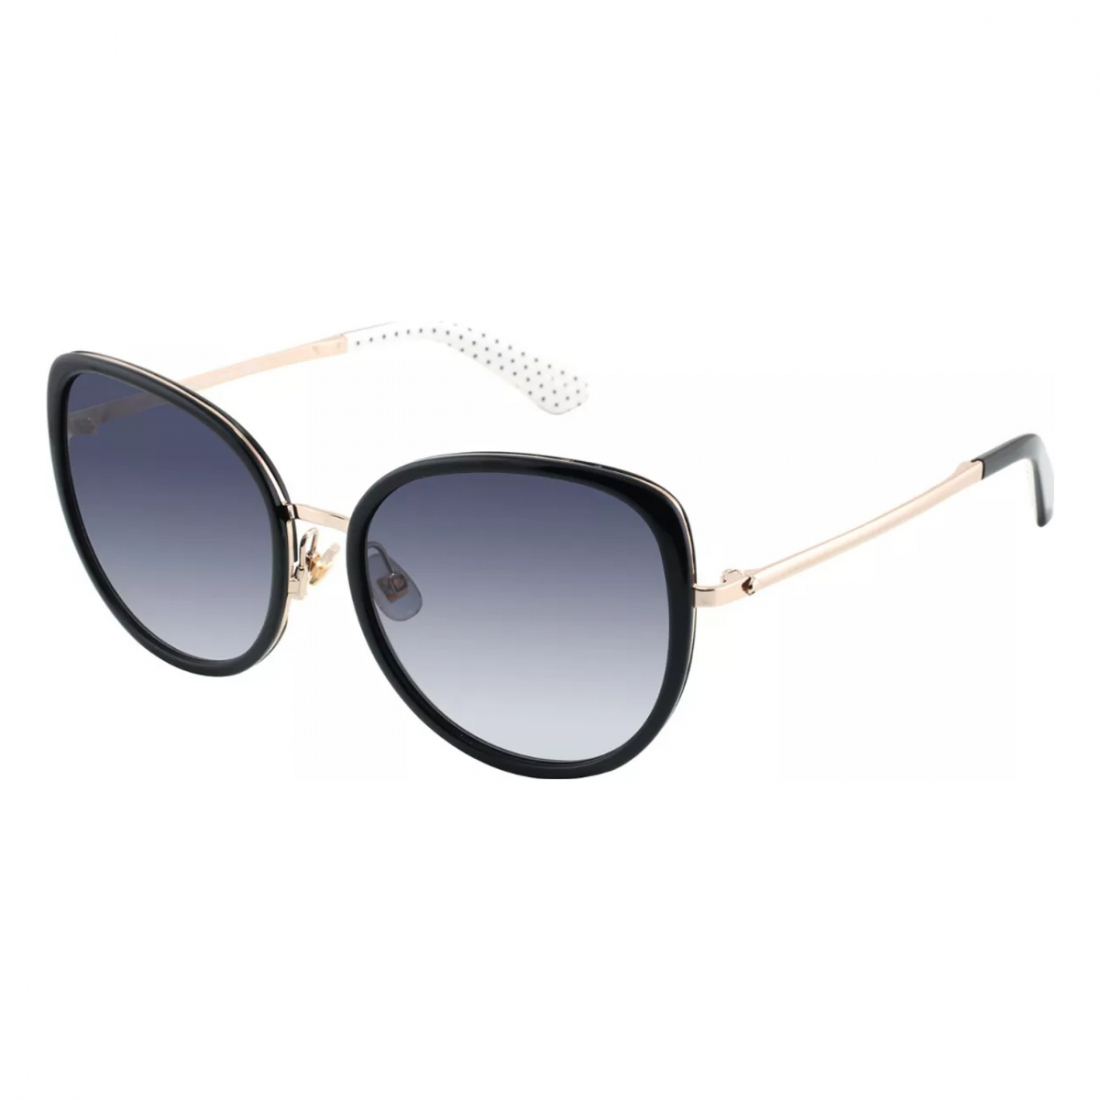 Women's 'JENSEN/G/S 807' Sunglasses